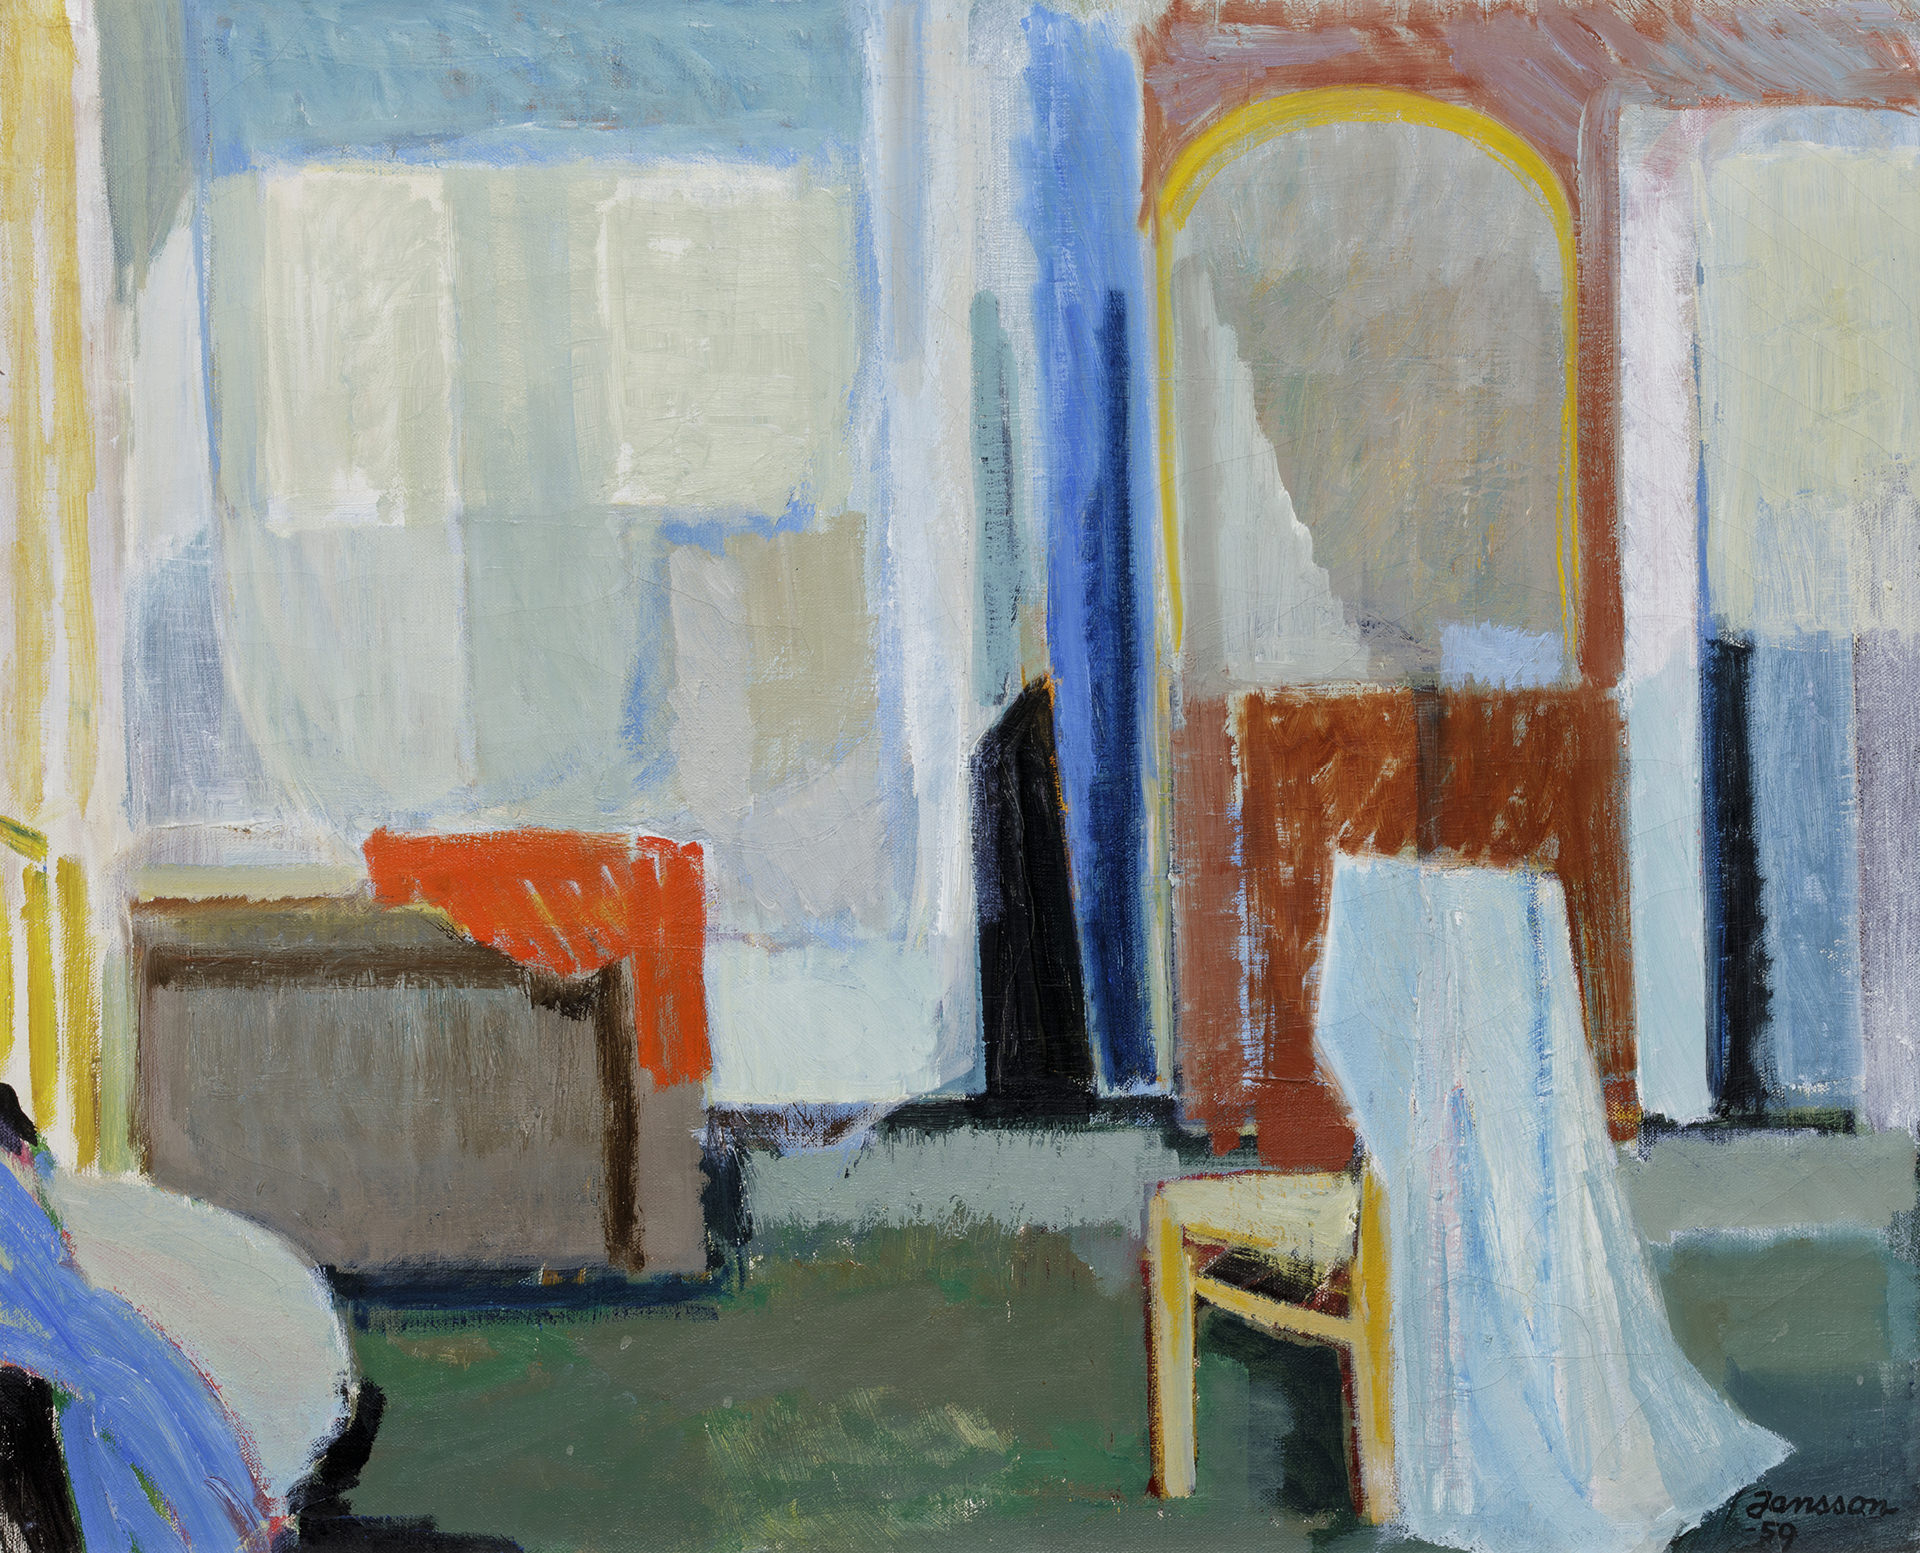 Tove Jansson painting interior